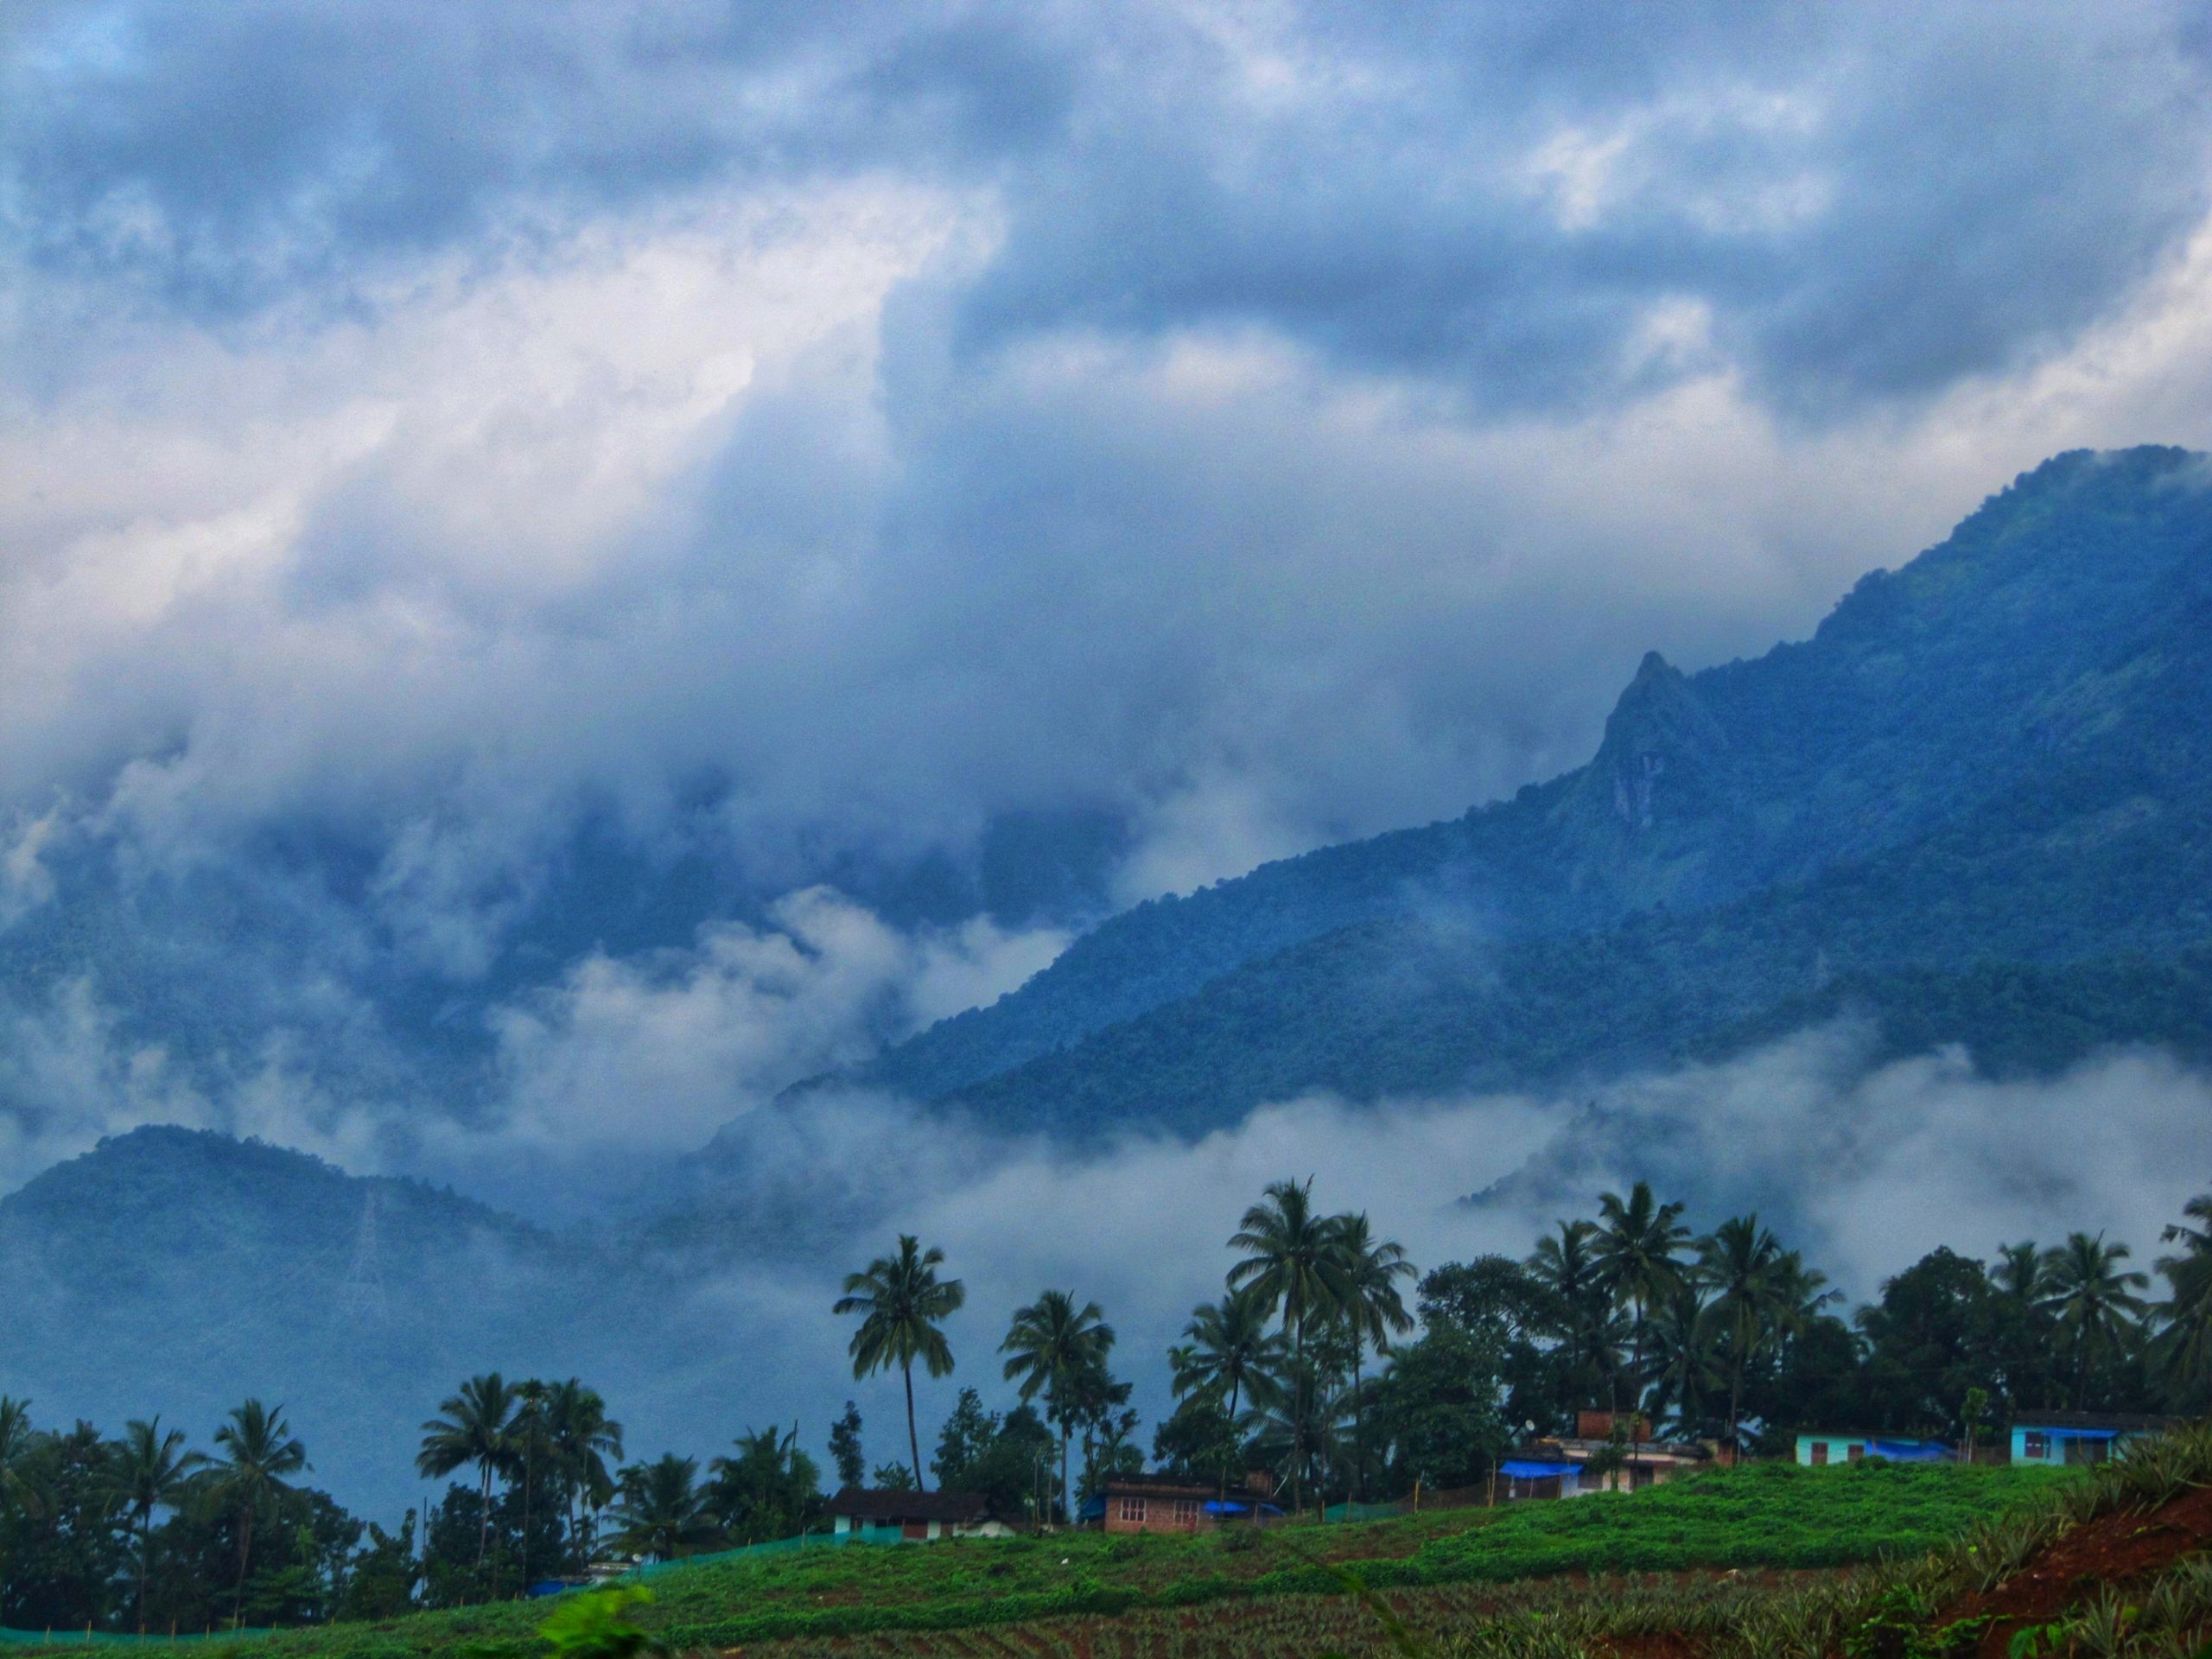 Aesthetic green mountains in Kerala.